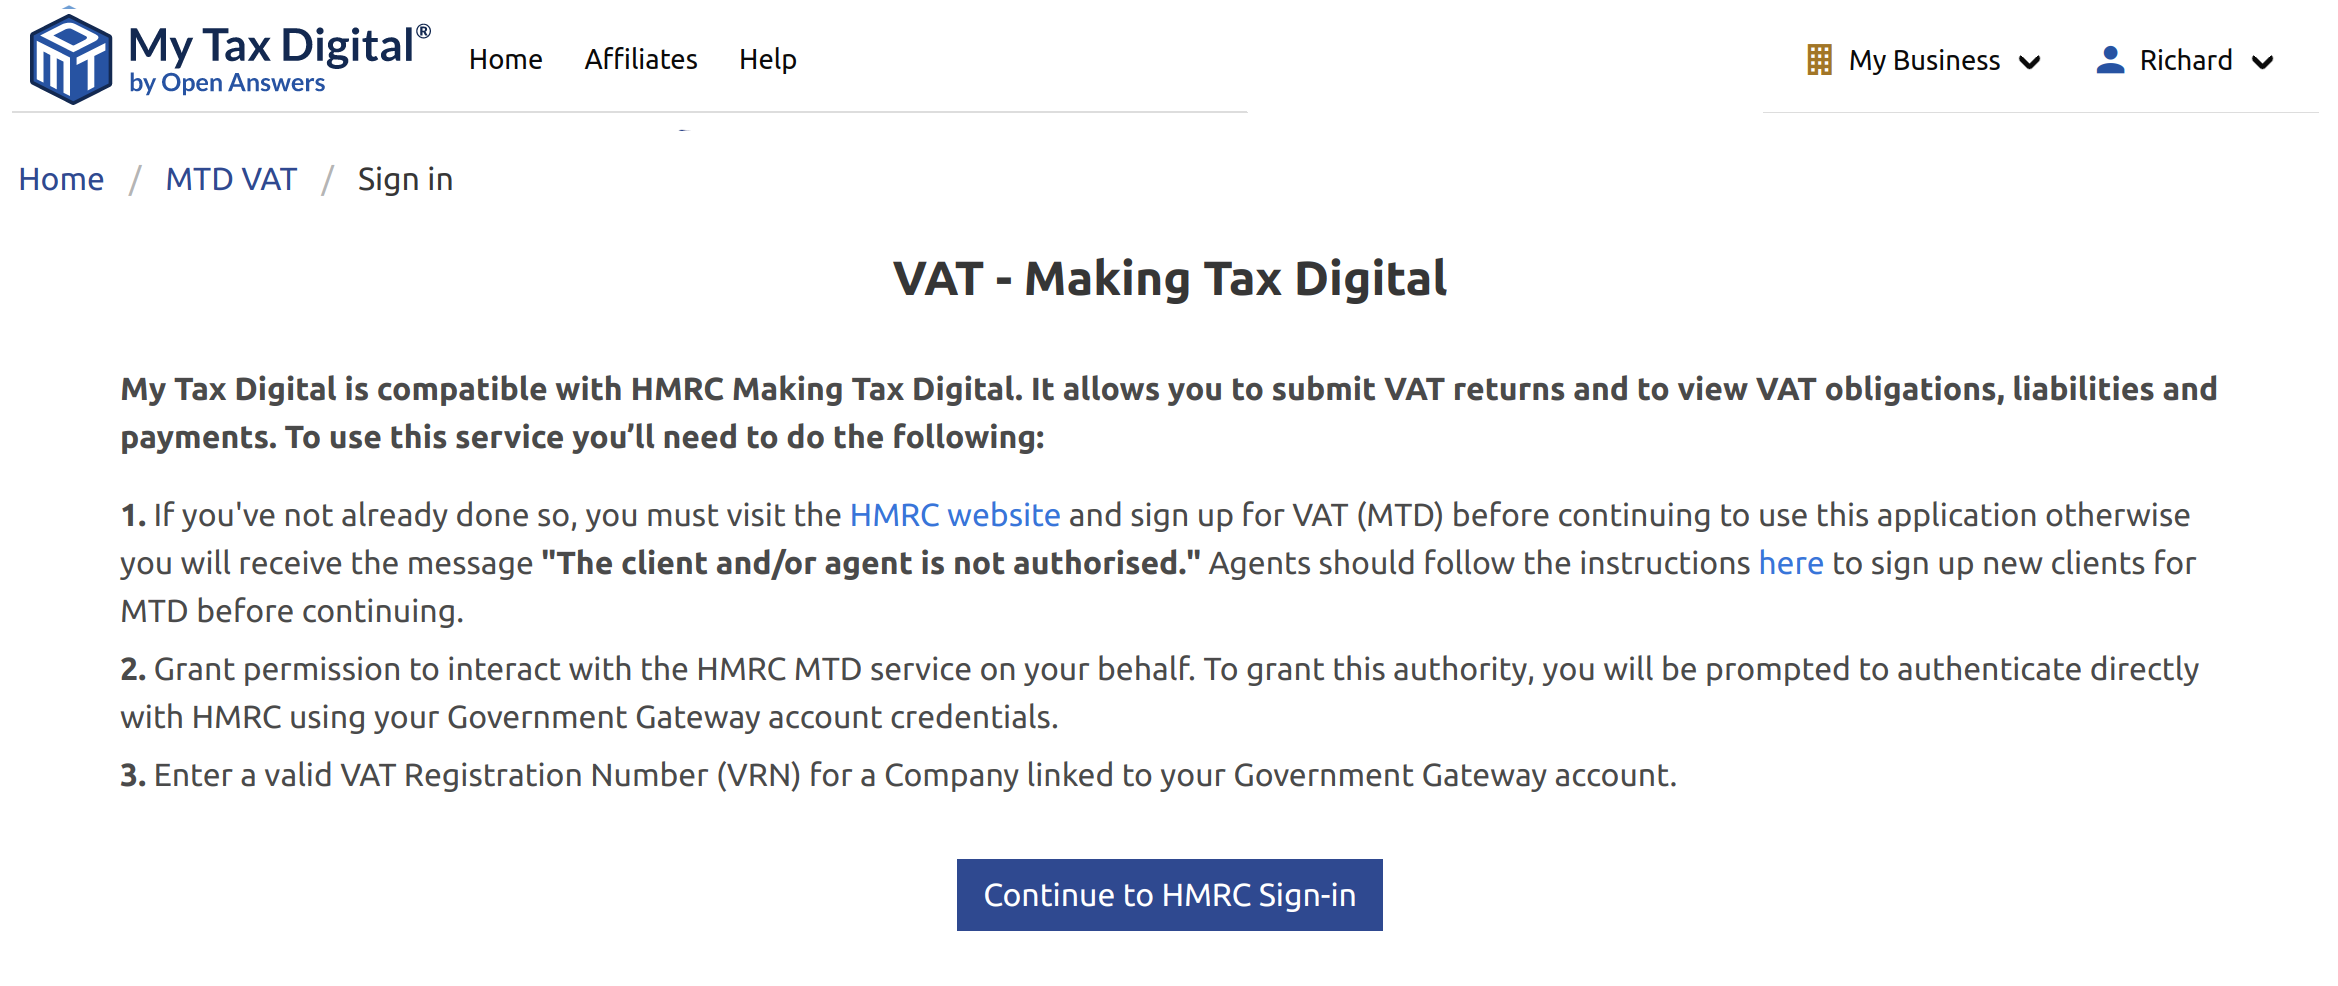 My Tax Digital HMRC MTD sign-in